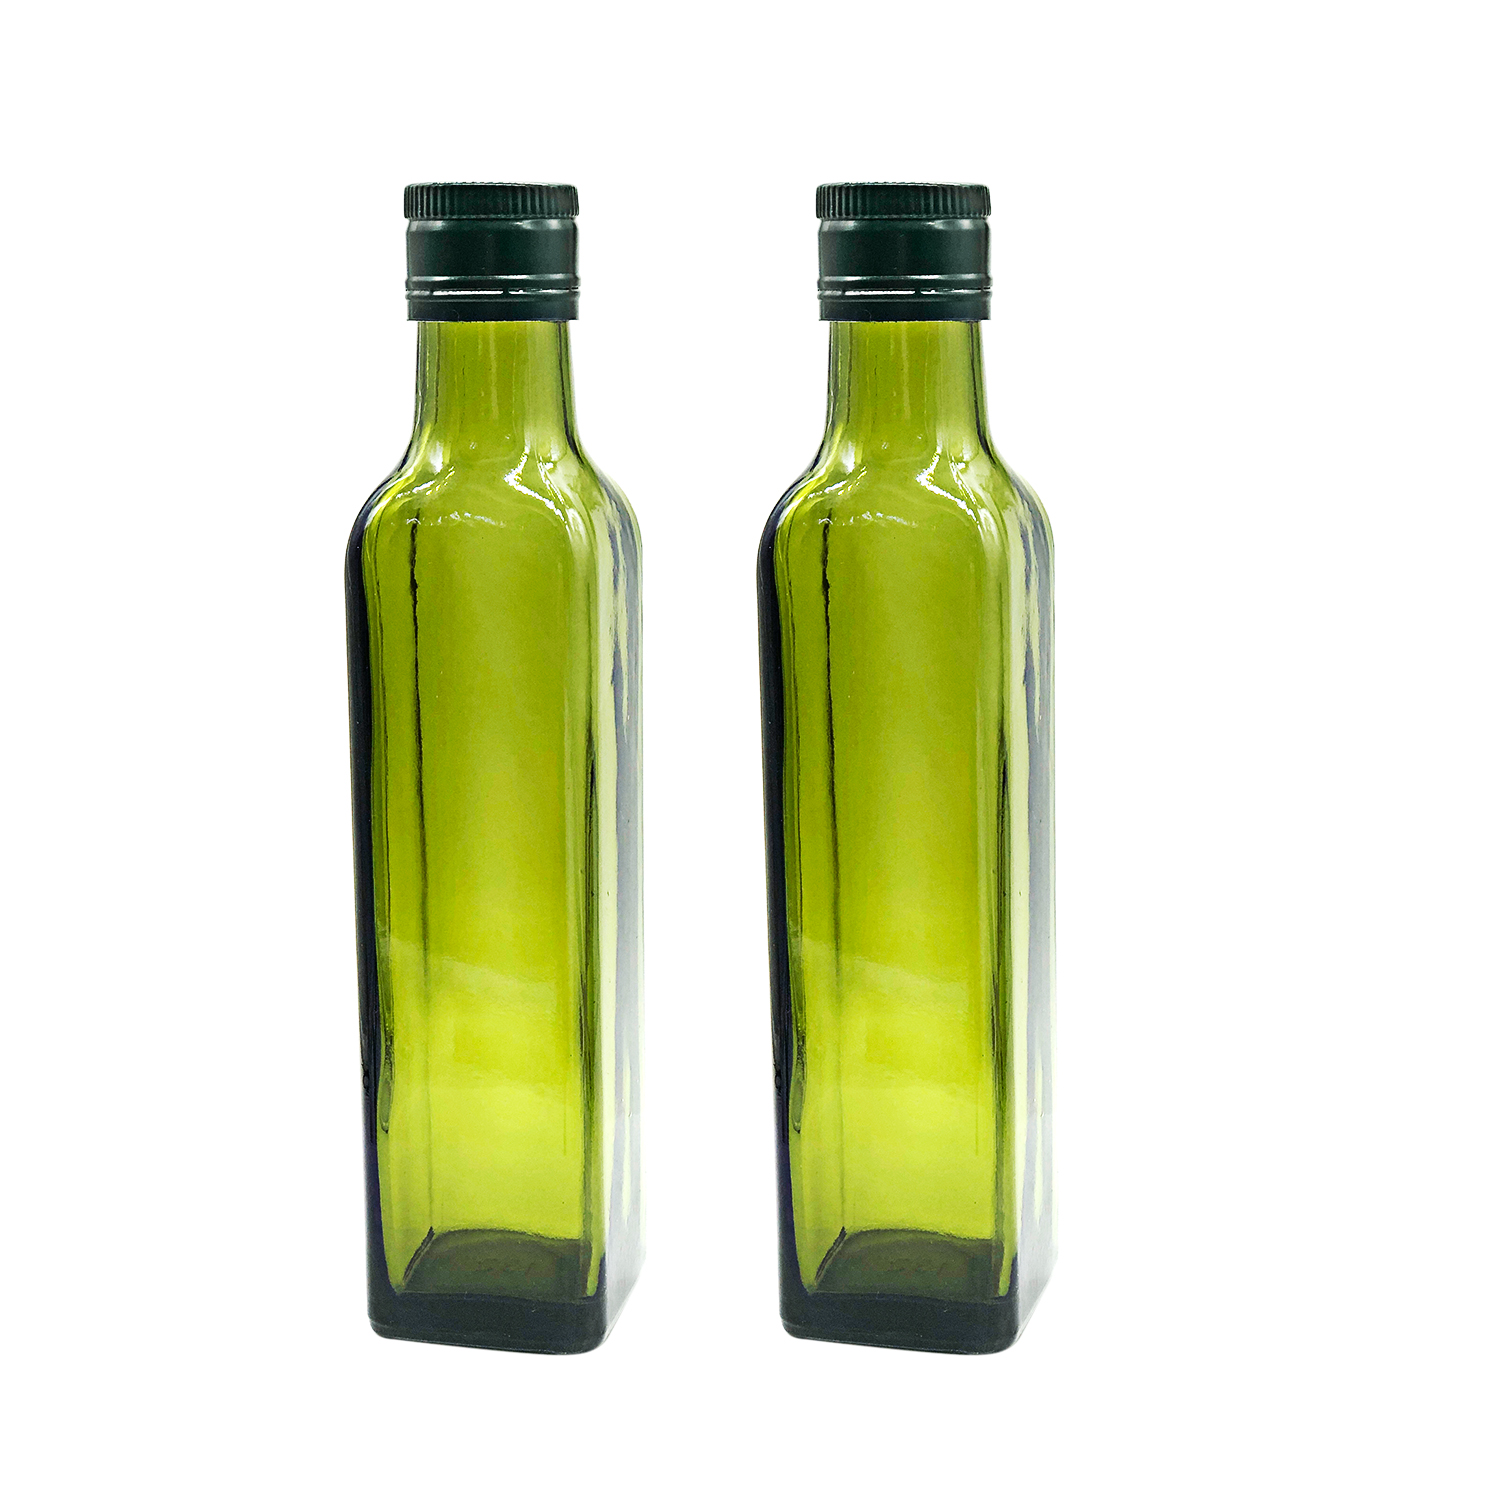 Butelki szklane oliwy z oliwek